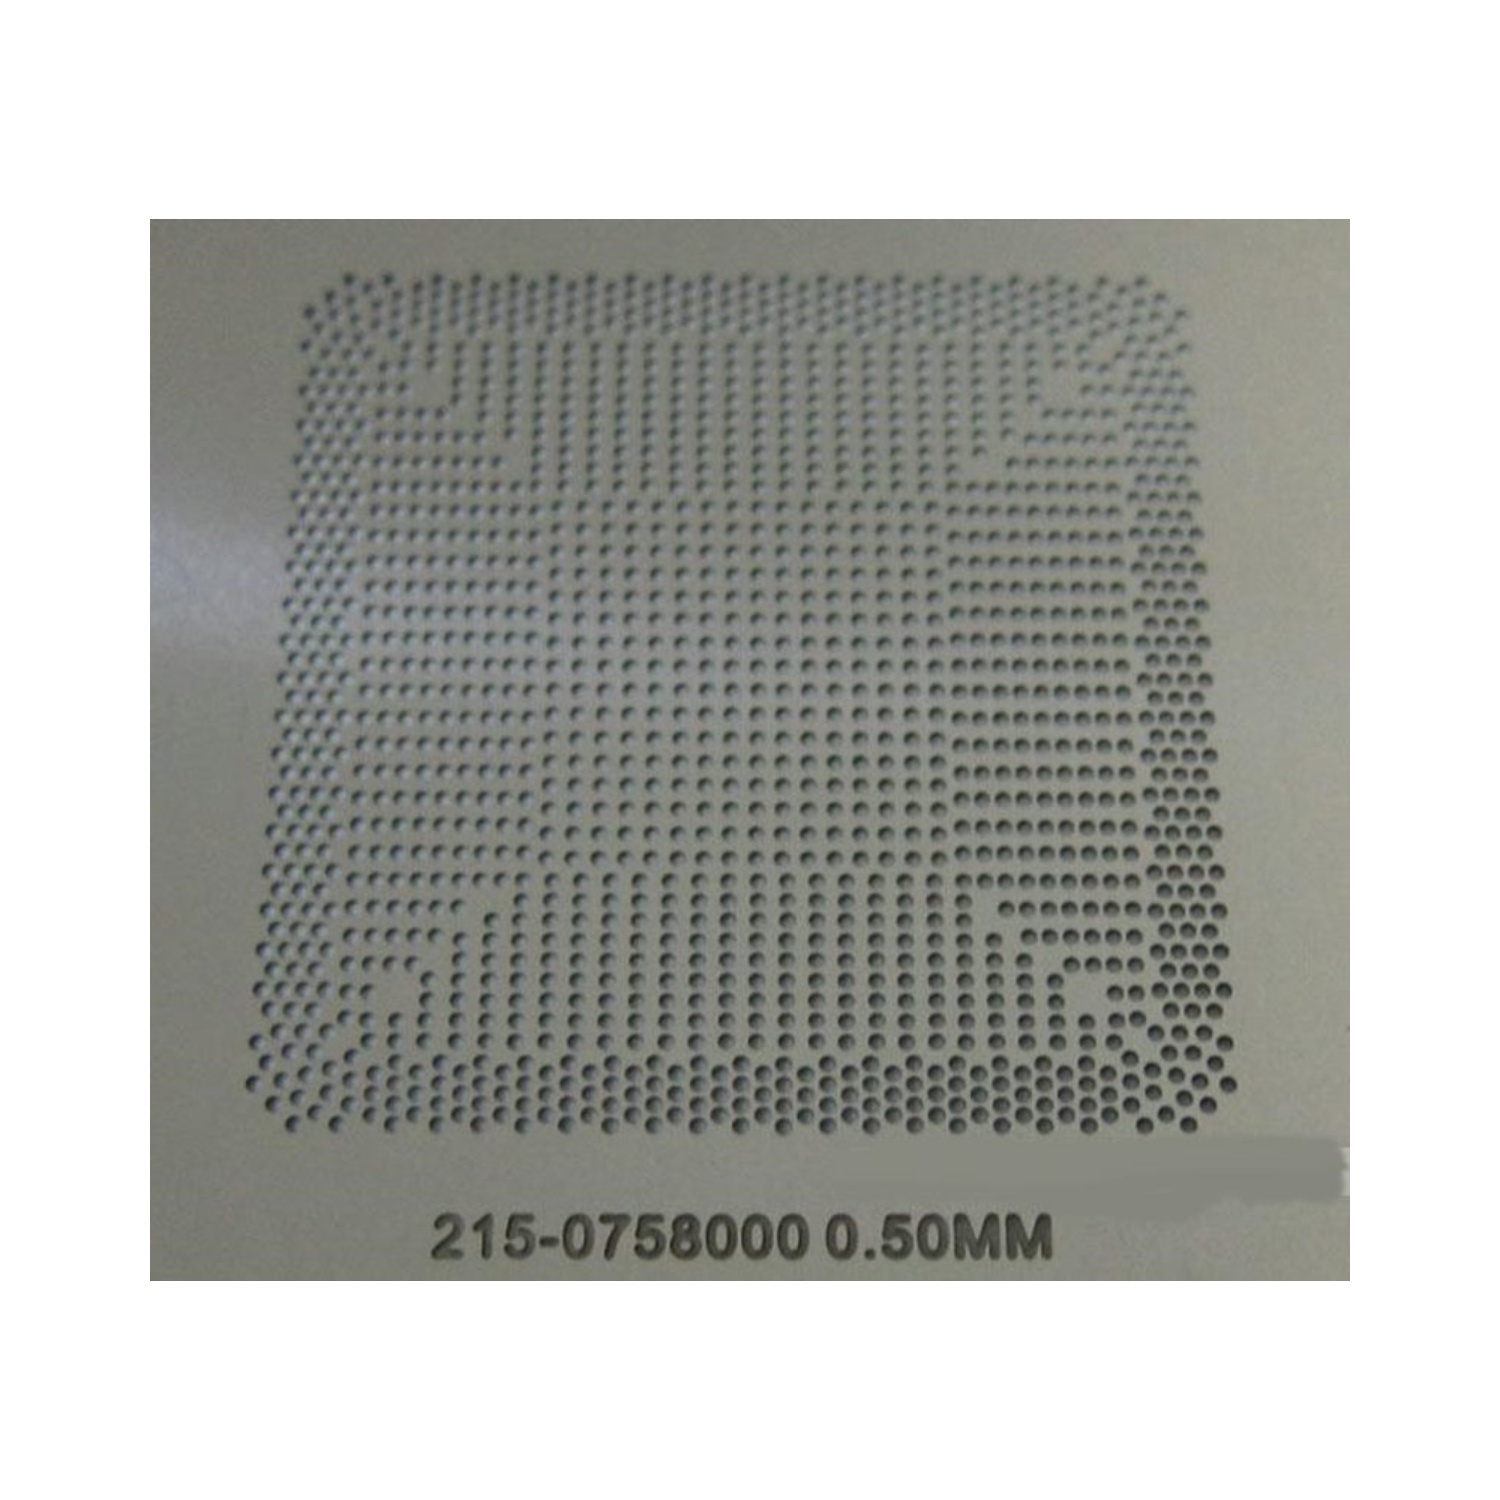 Kit stencil 215-0758000 Bga Calor Direto Reballing G17 + solda esfera 0.5mm